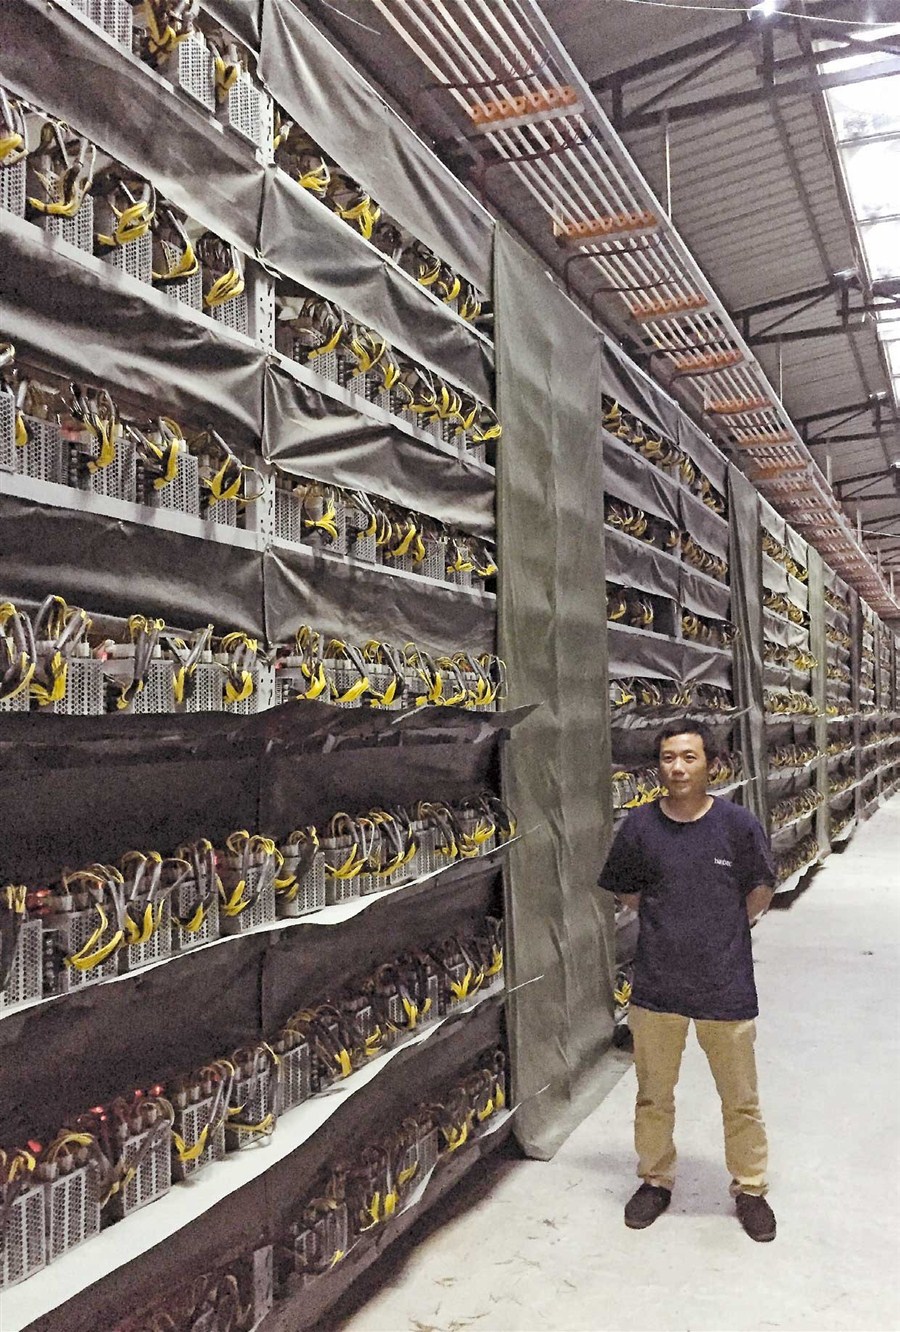 In Boondocks Computers Mine Bitcoins Shanghai Daily - 